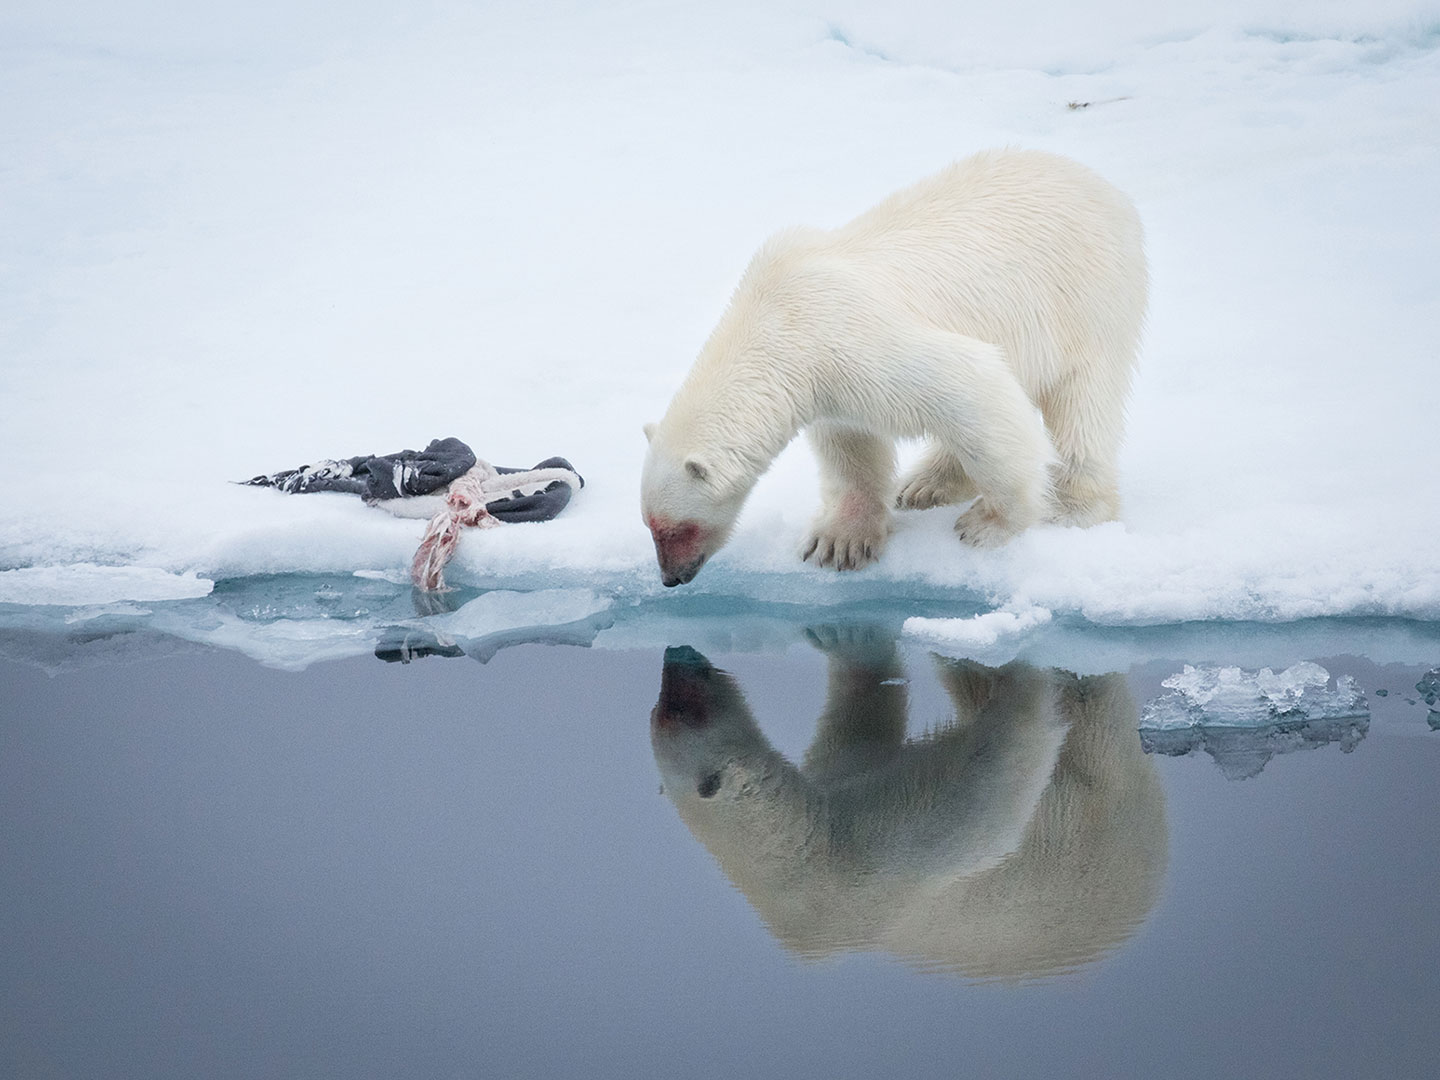 Will the Last Ice Area support polar bears? 